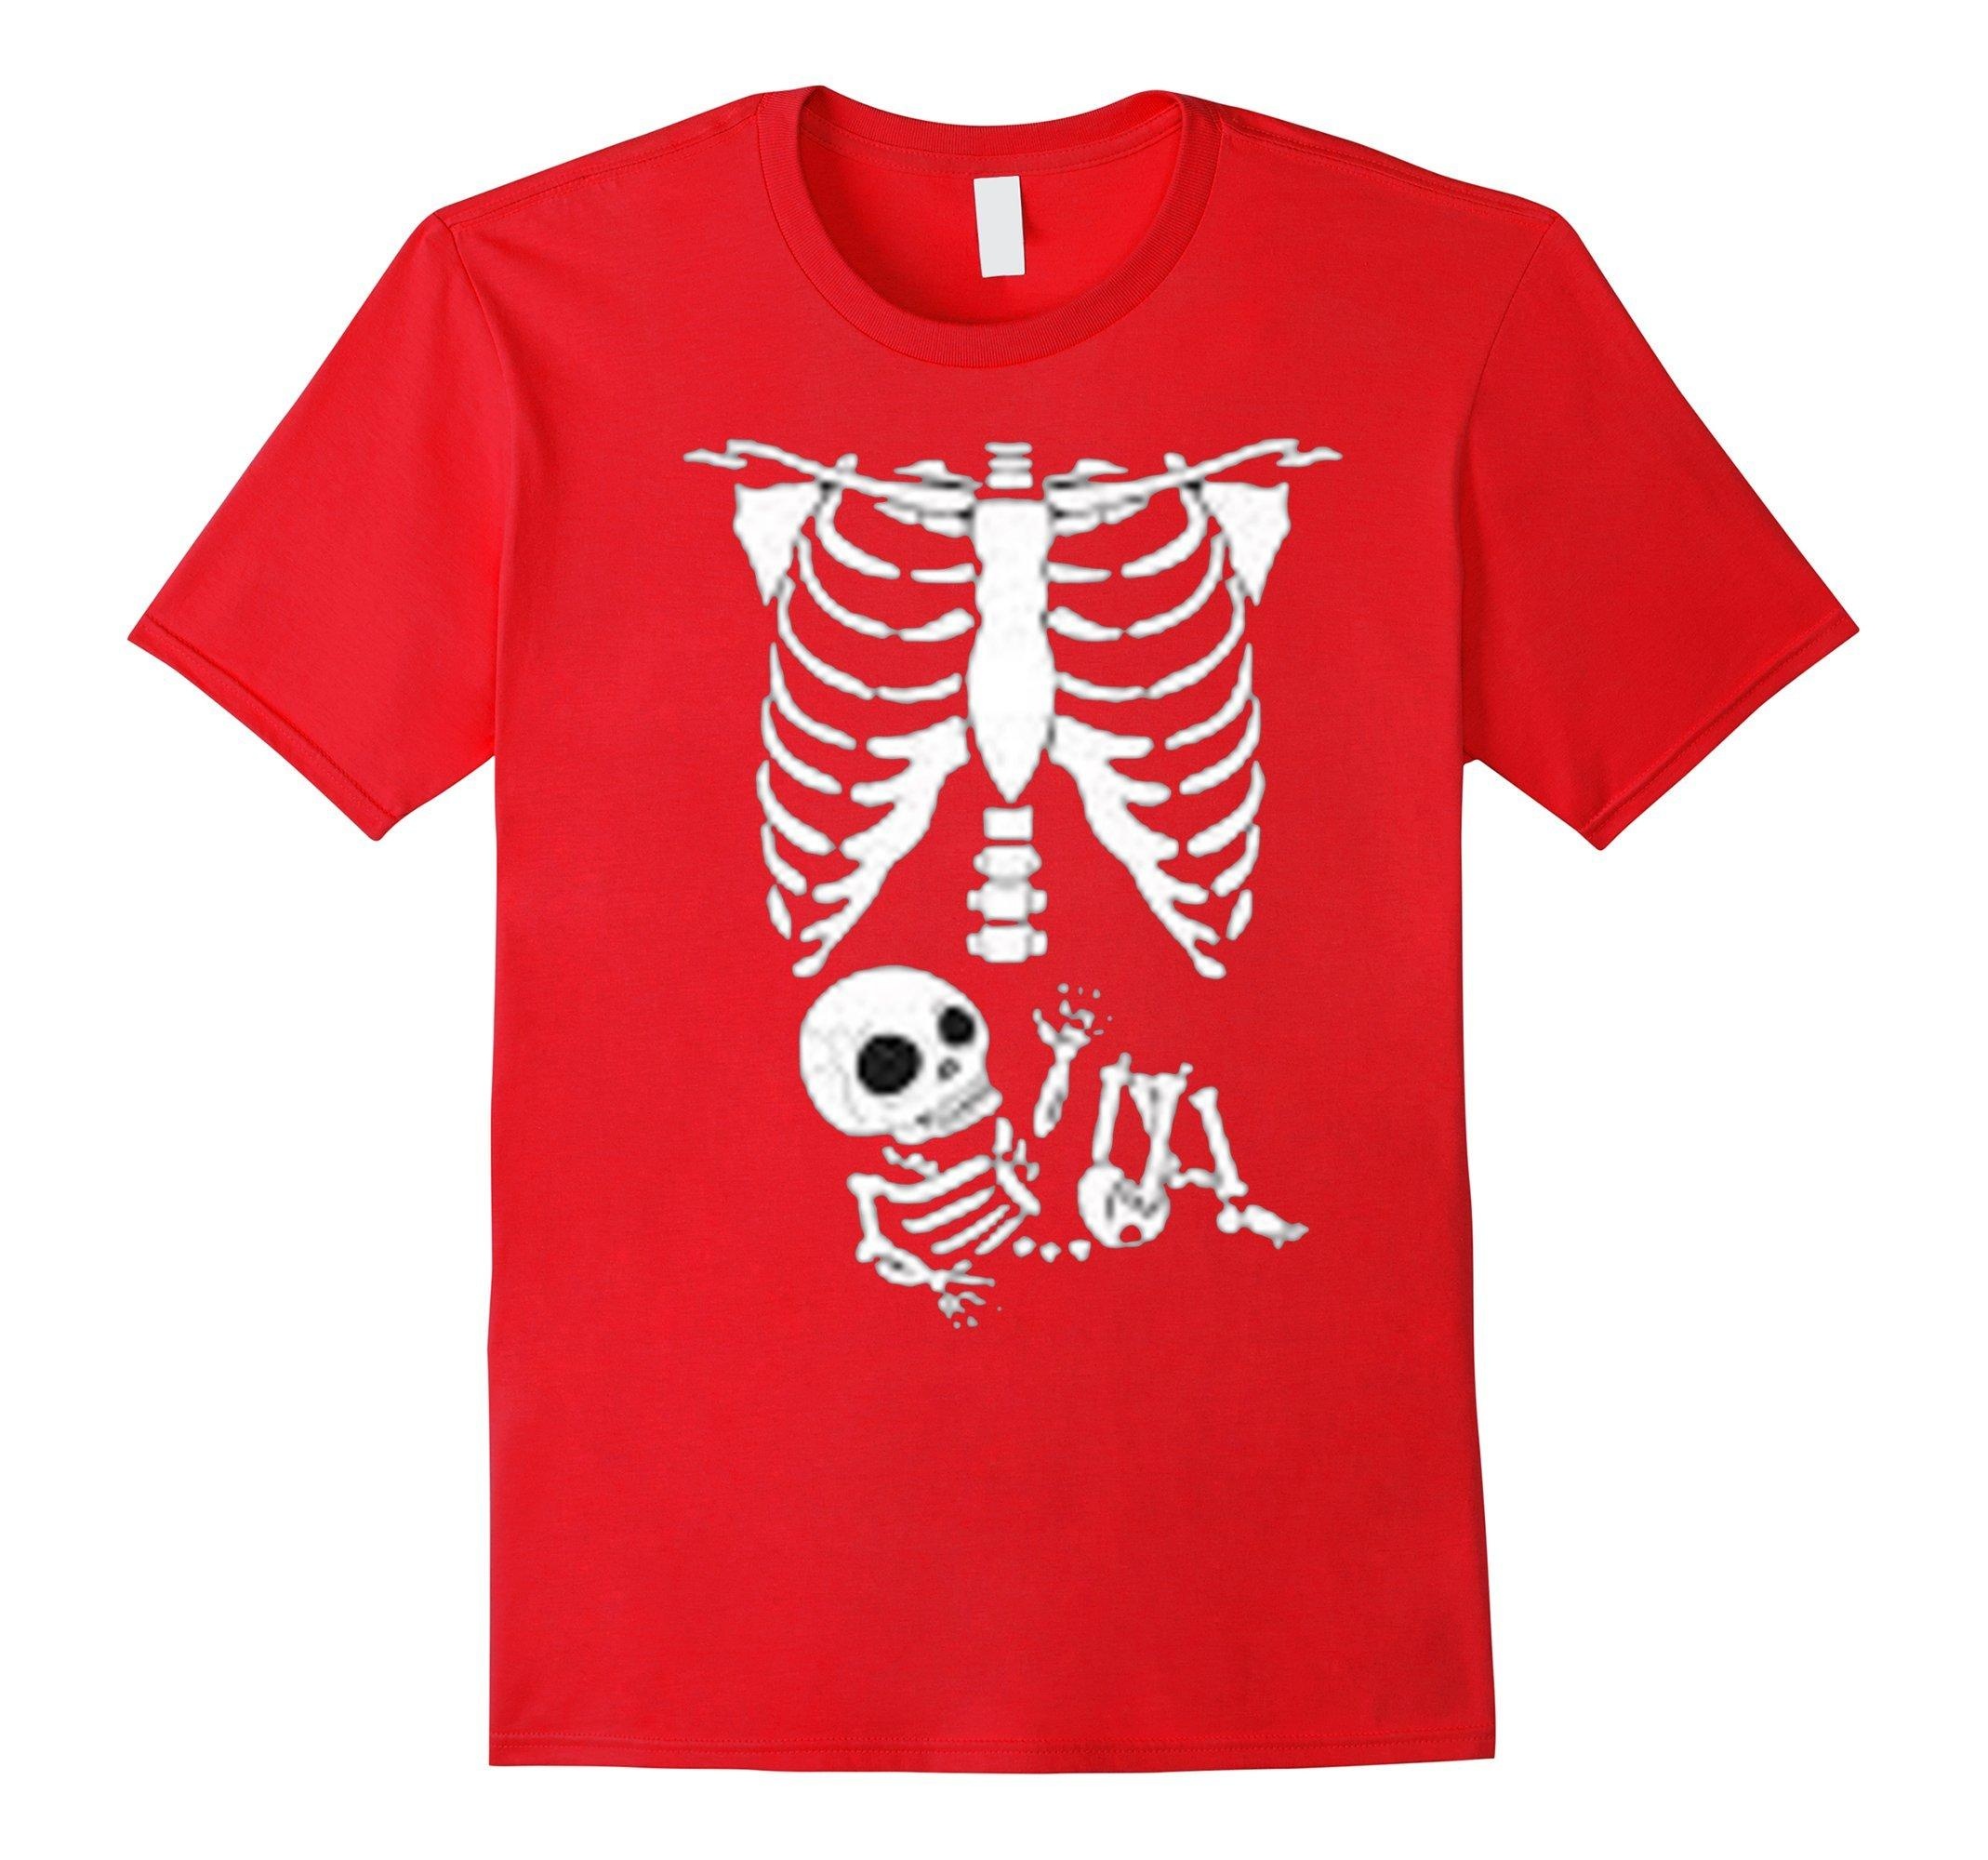 Men's Maternity White Skeleton Rib Cage Halloween T-Shirt Funny XL ...